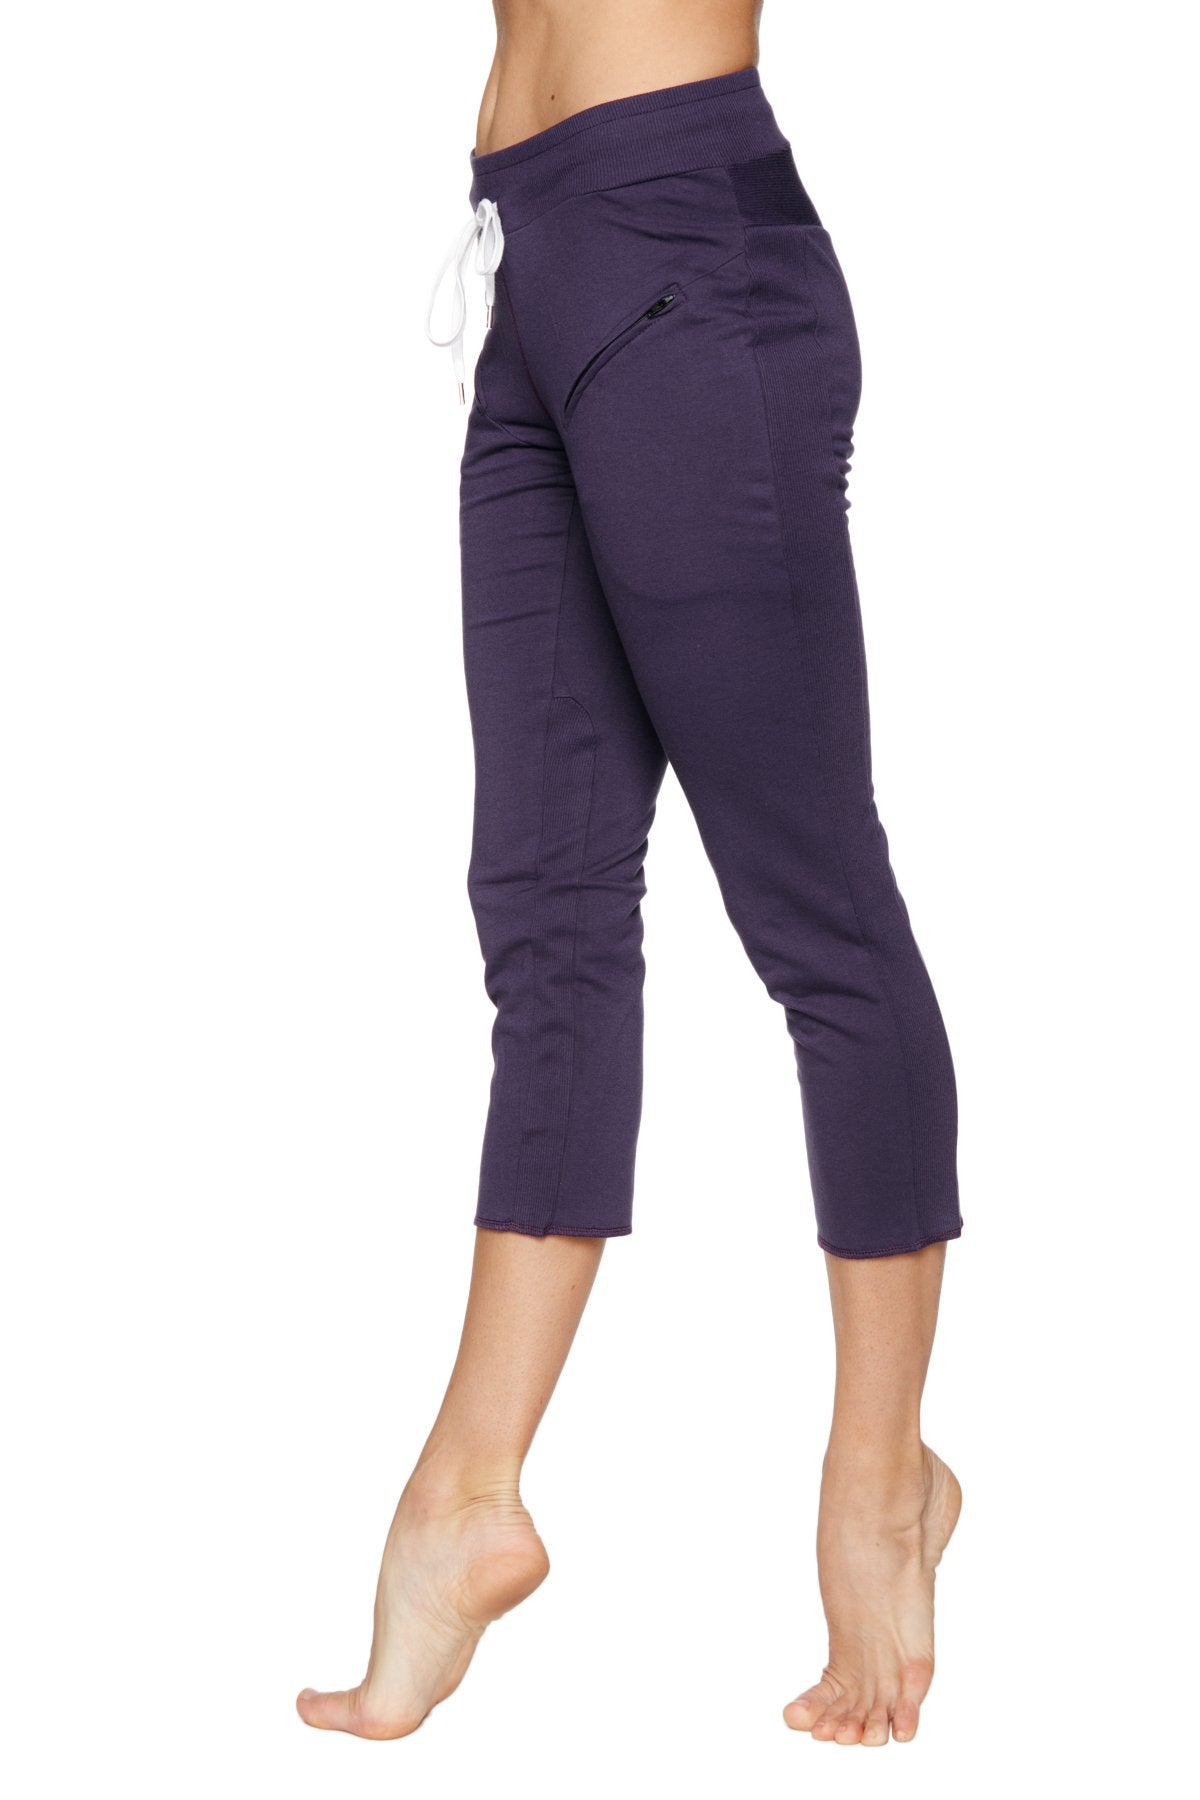 capri yoga pants with pockets